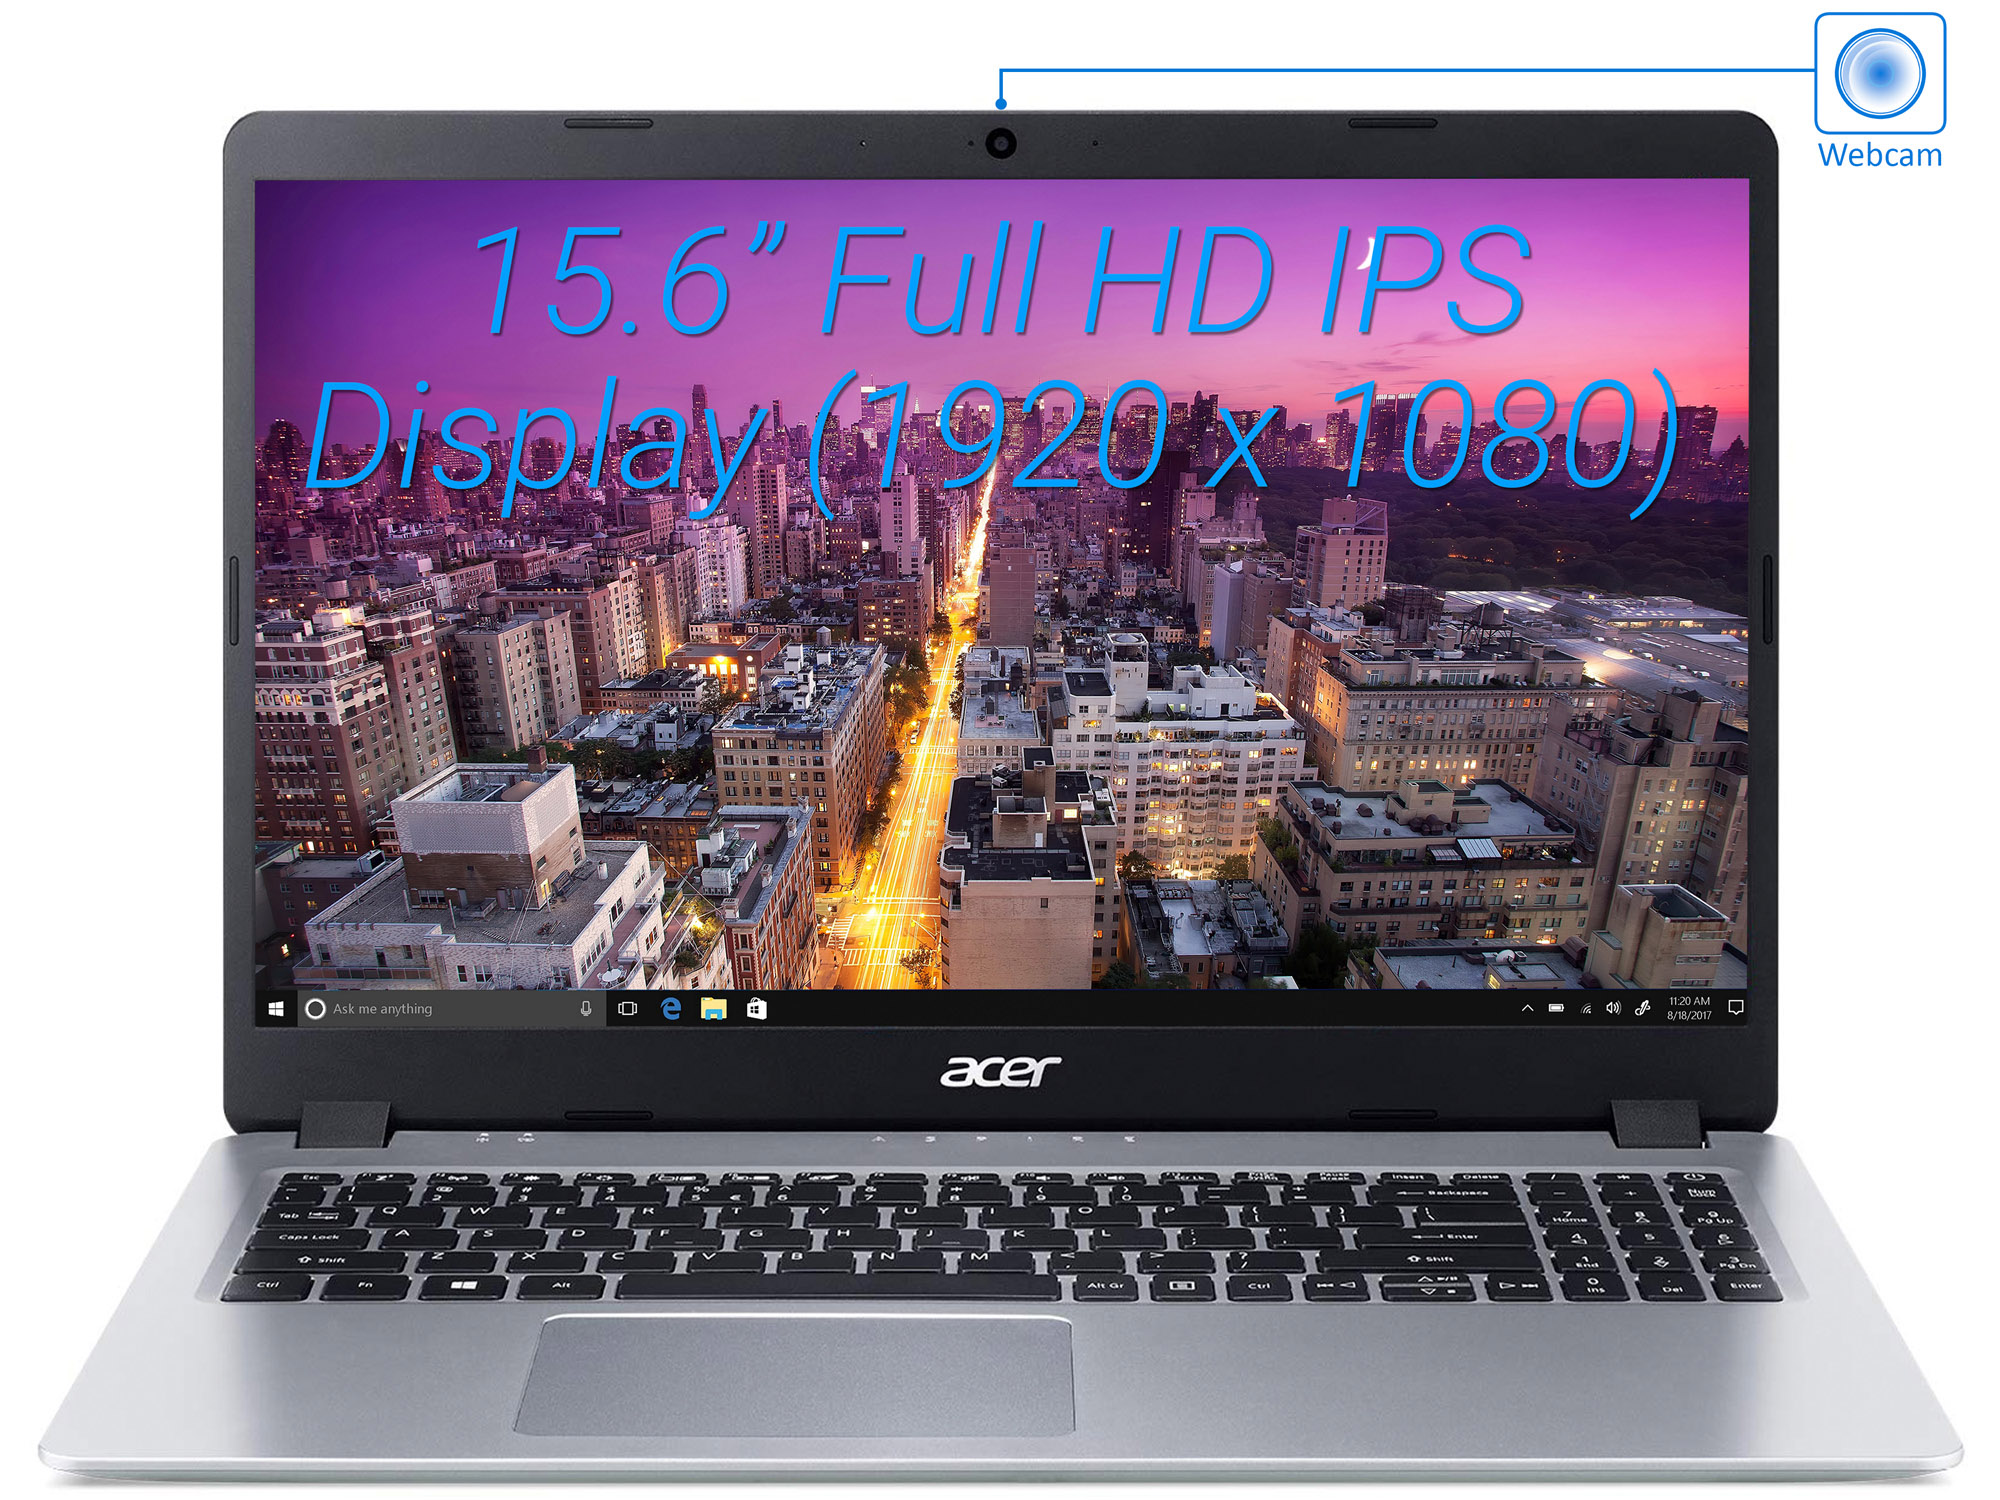 Acer Aspire 5 Slim Laptop, 15.6" Full HD IPS Display, AMD Ryzen 3 3200U, Vega 3 Graphics, 4GB DDR4, 128GB SSD, Backlit Keyboard, Windows 10 in S Mode, A515-43-R19L - image 2 of 7